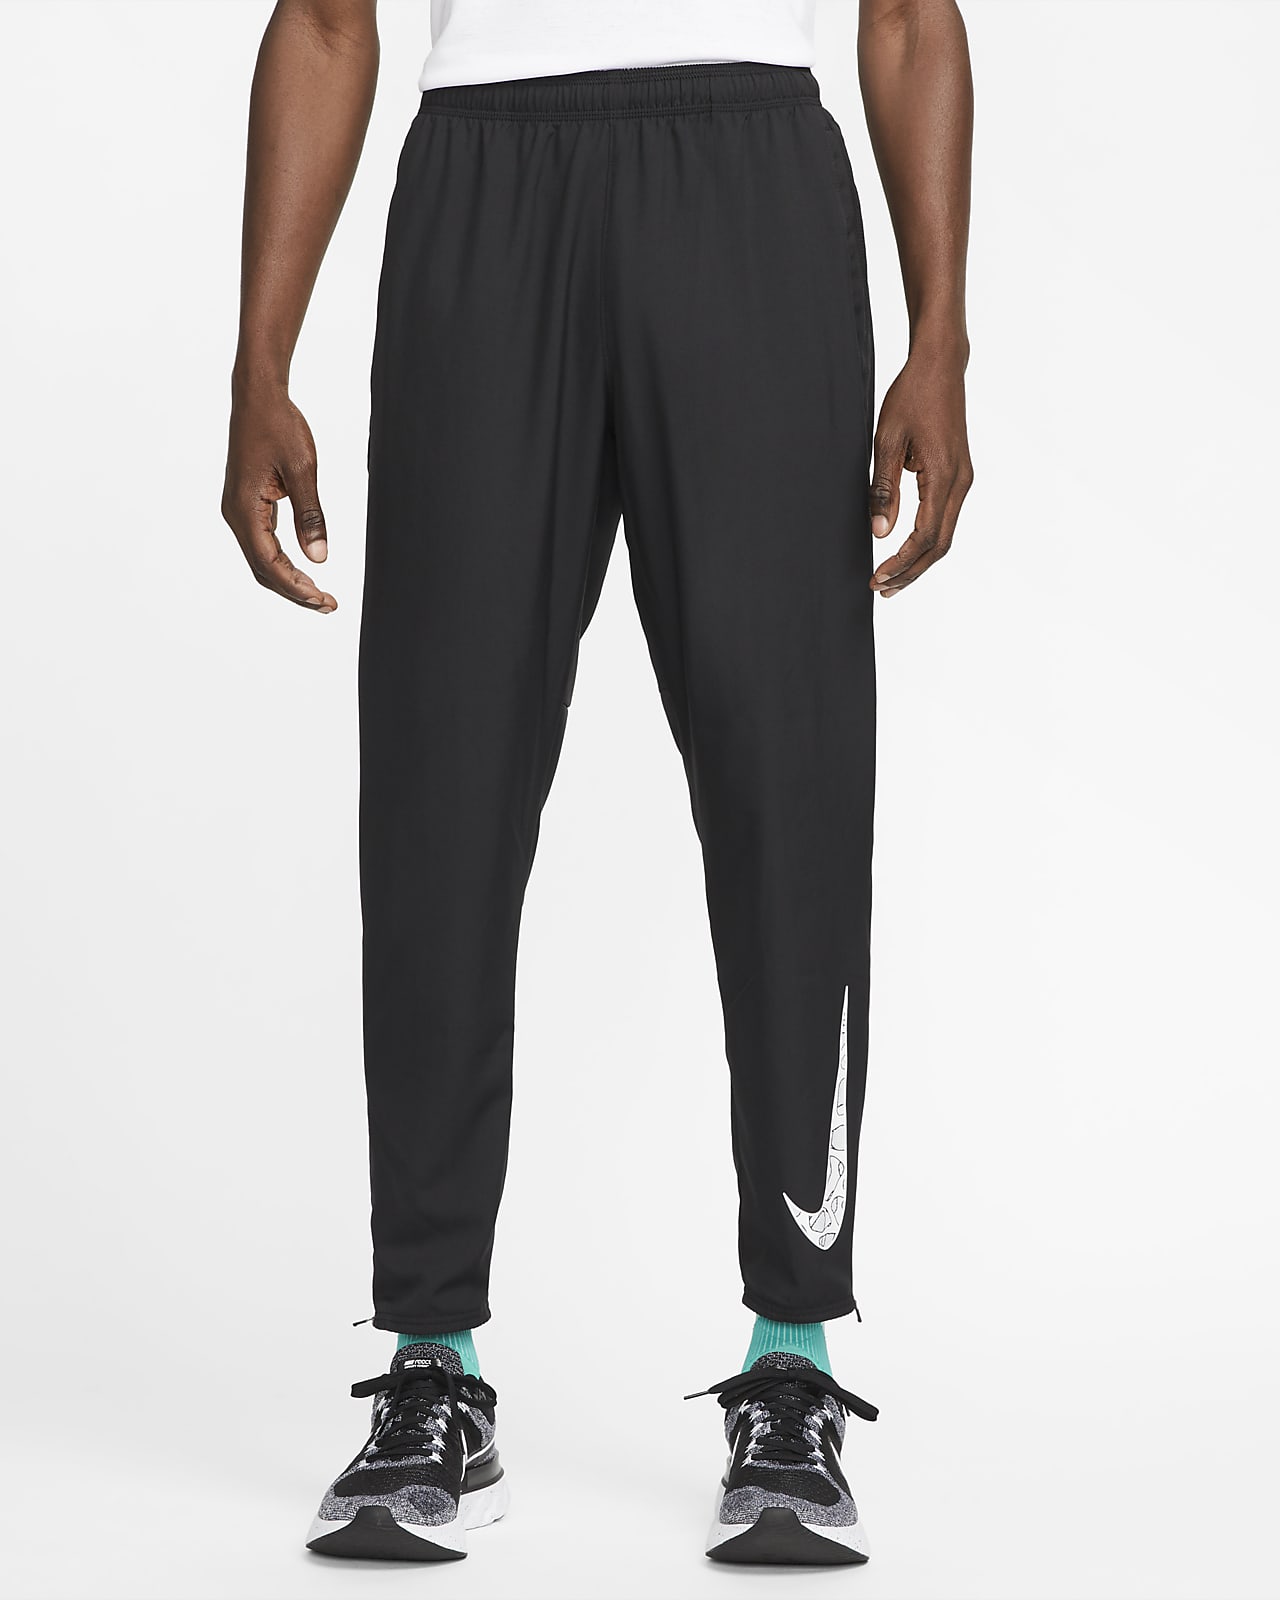 Nike Challenger D.Y.E. Men's Running Trousers